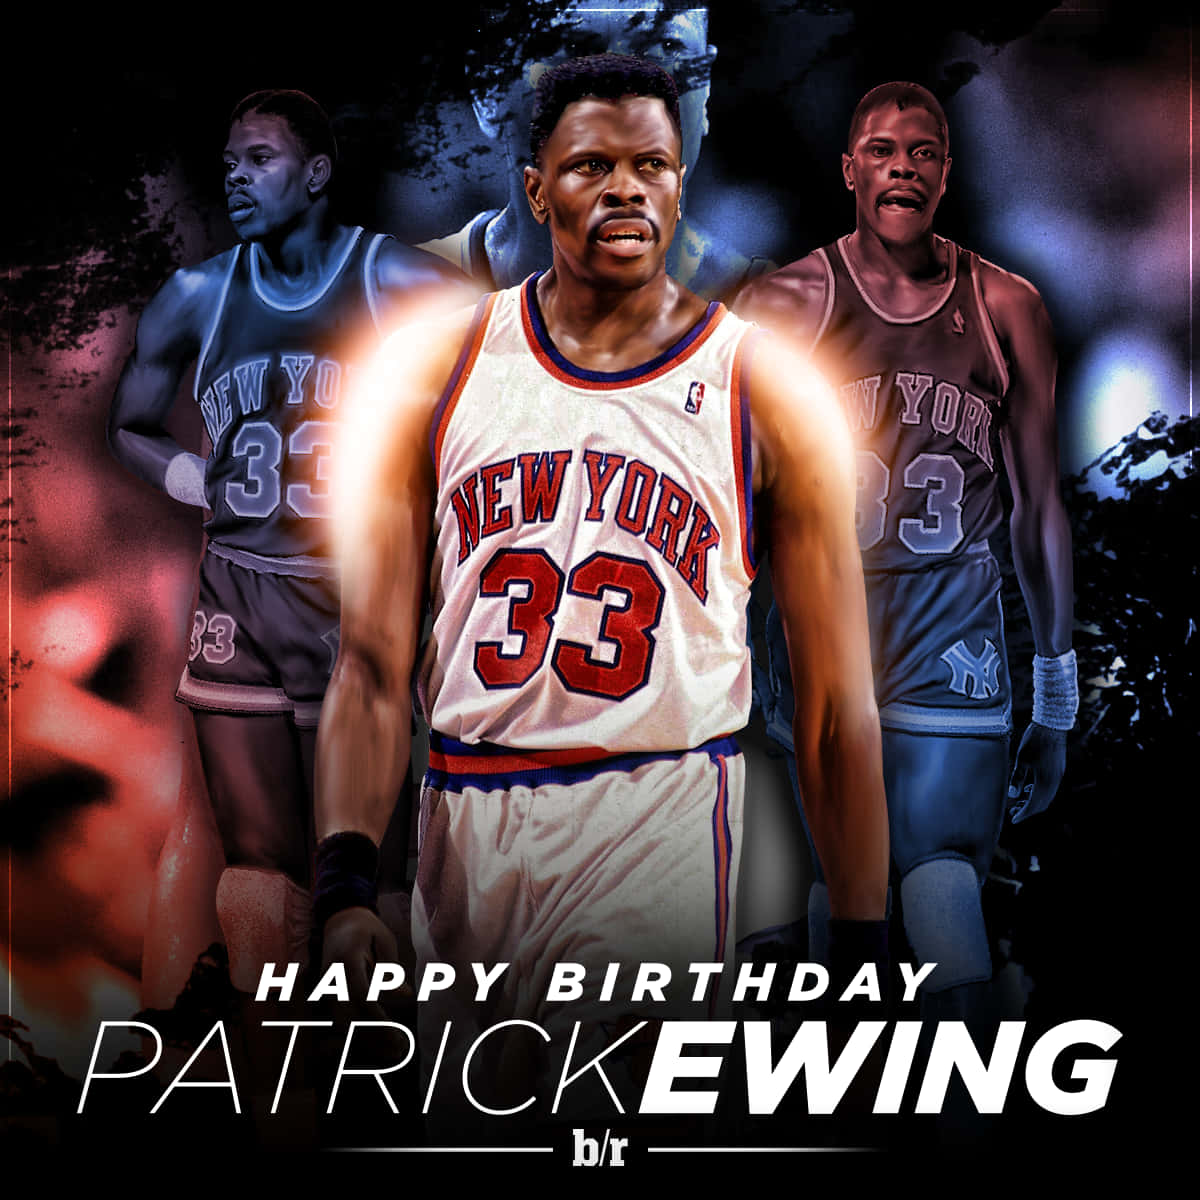 Allesgute Zum Geburtstag, Patrick Ewing Fanart. Wallpaper